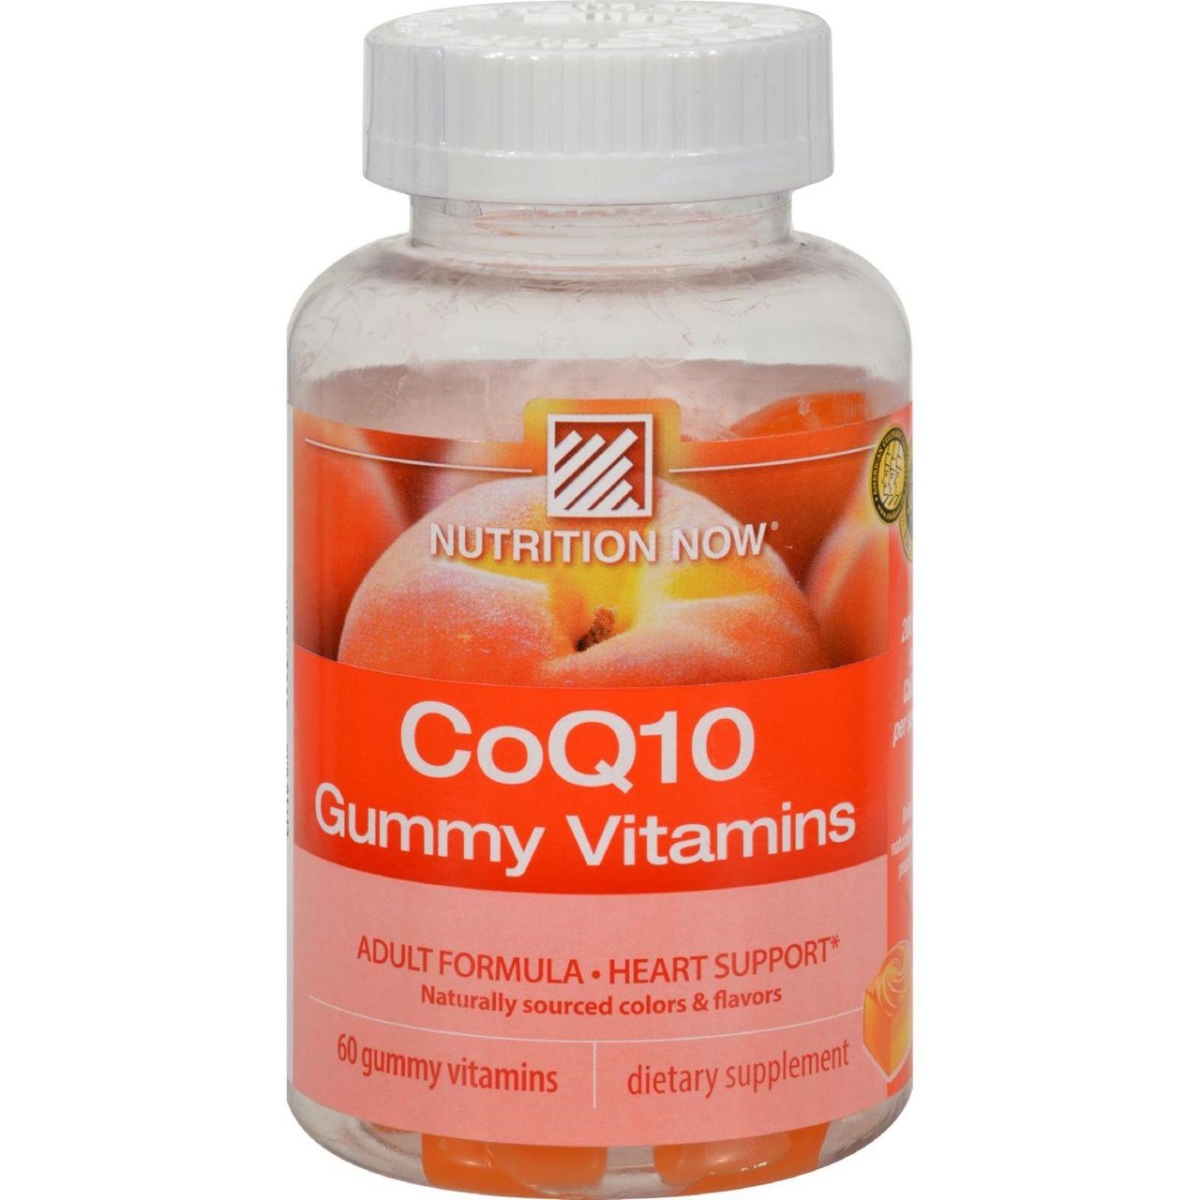 Hg1055656 Coq10 Adult Gummy Vitamin - 60 Gummy Vitamins